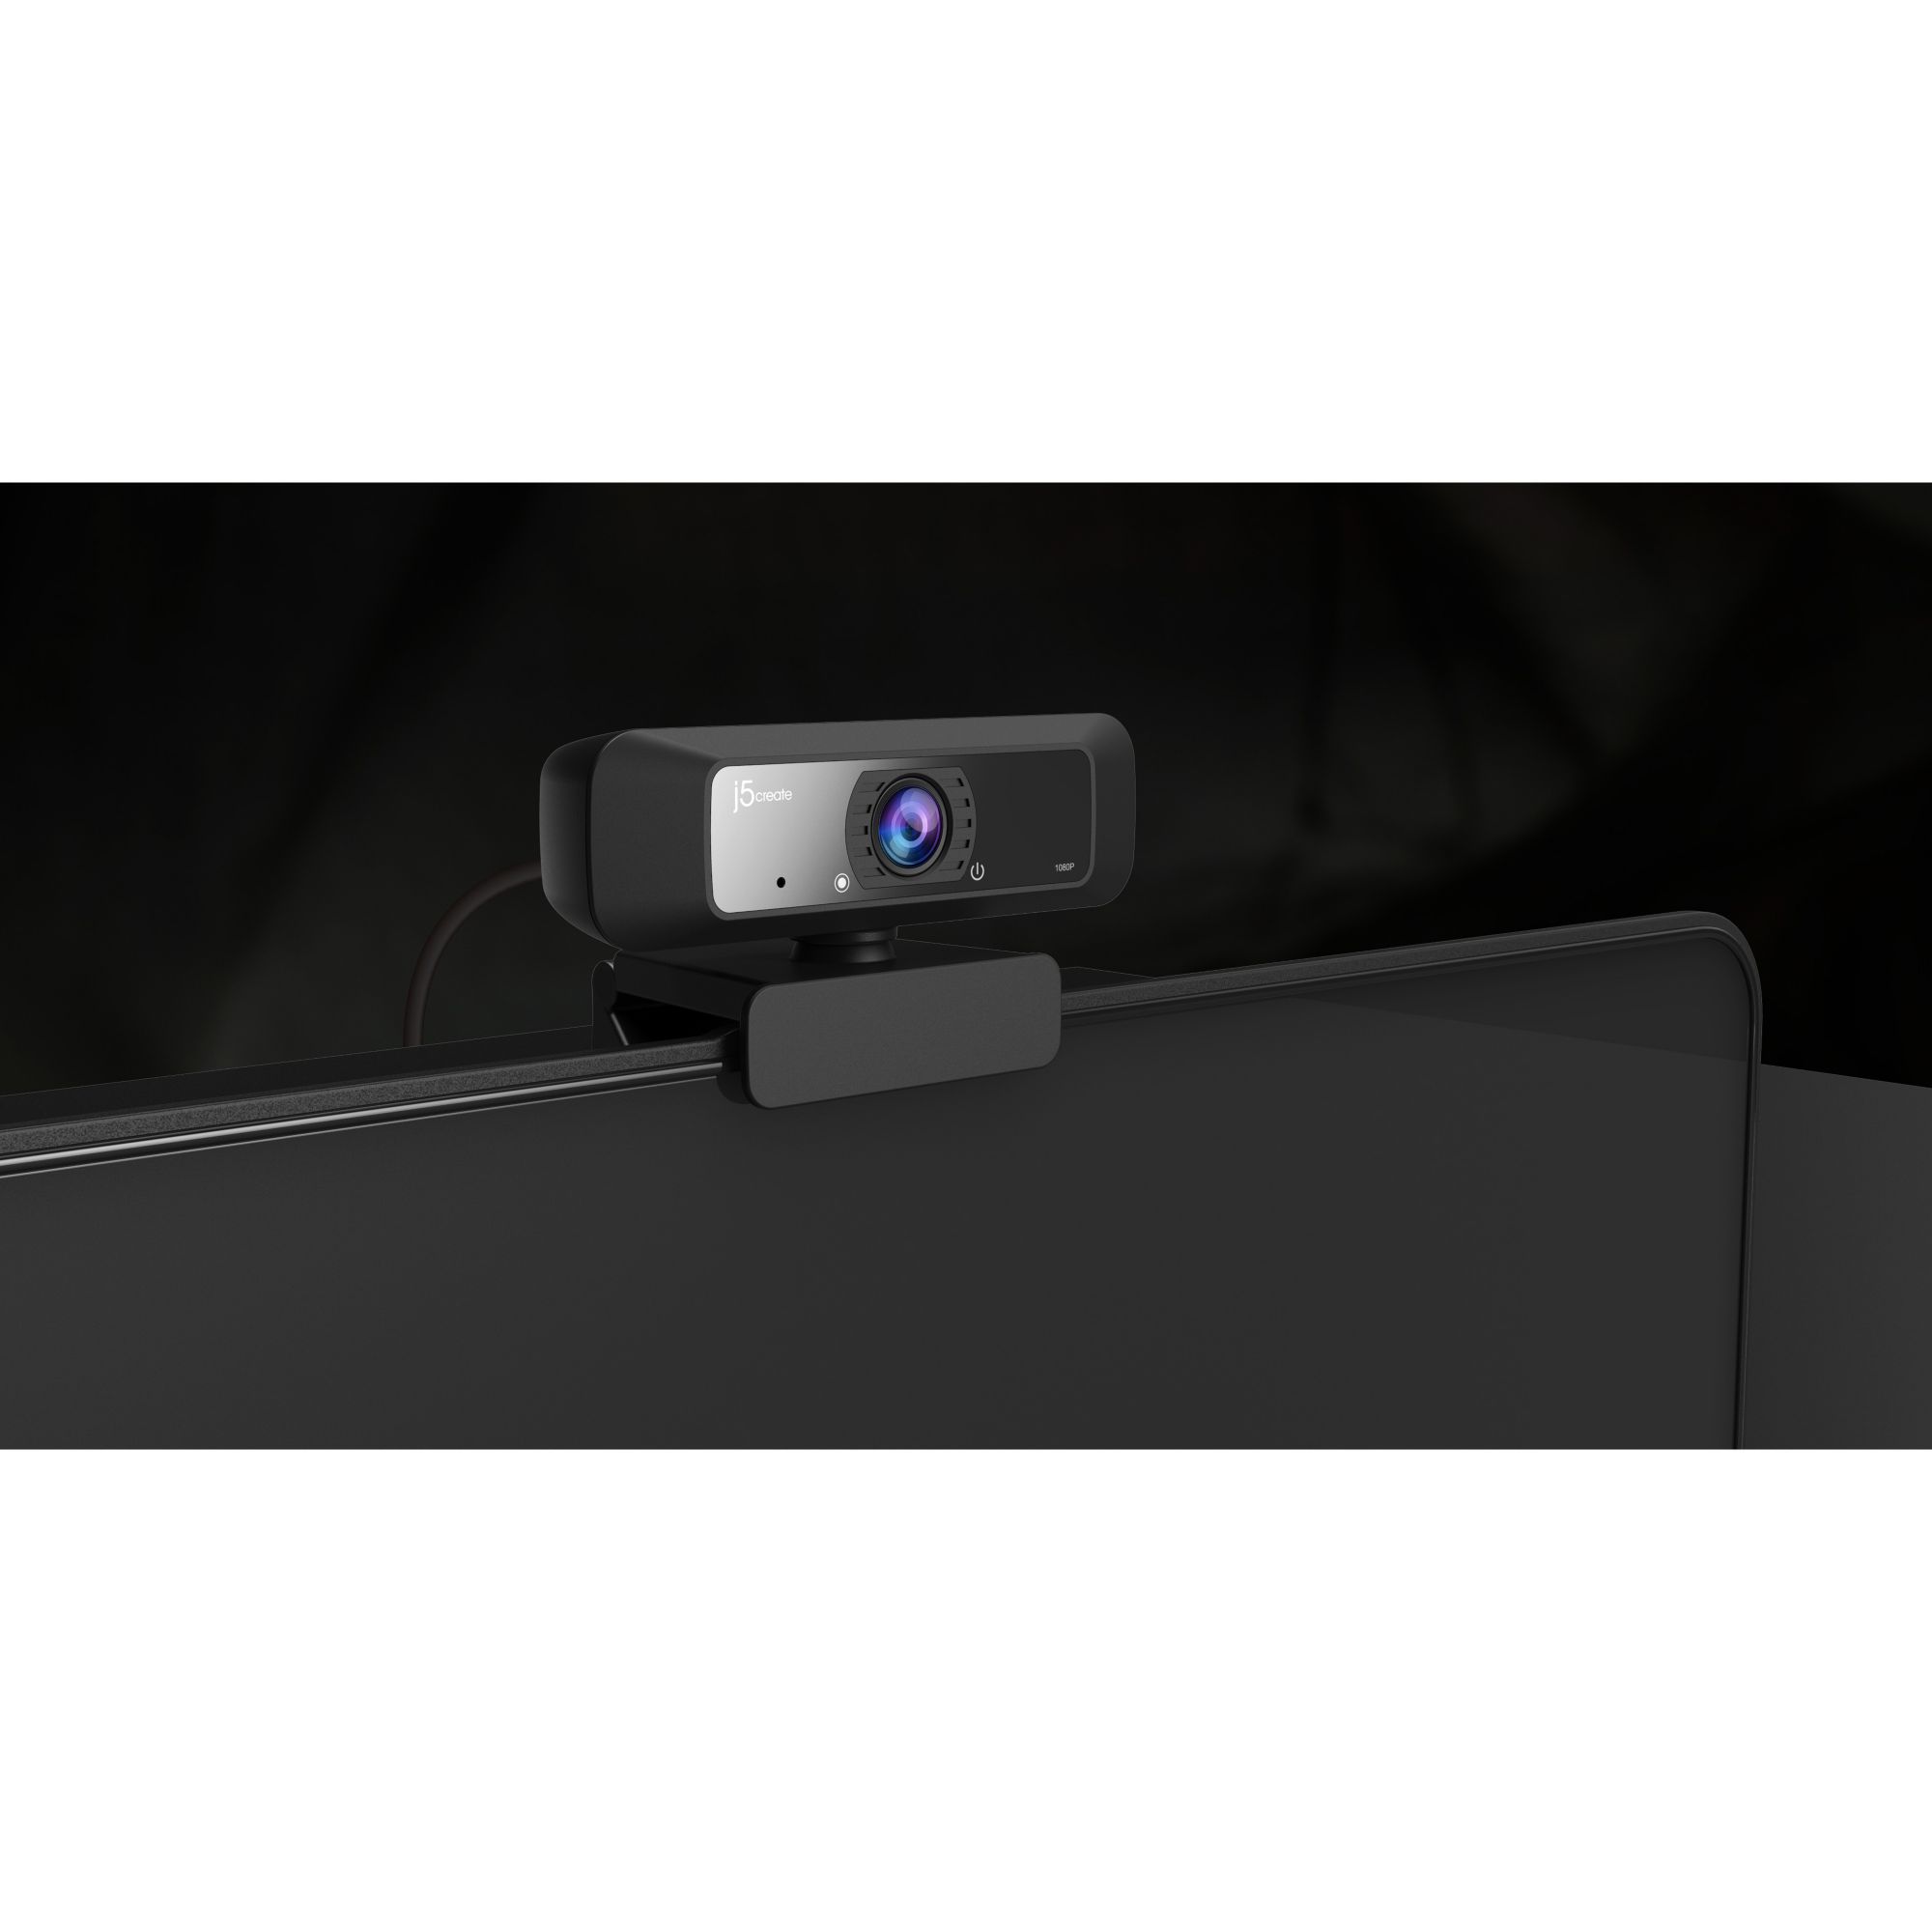 j5create USB HD Webcam with 360° Rotation Black JVCU100 - Best Buy